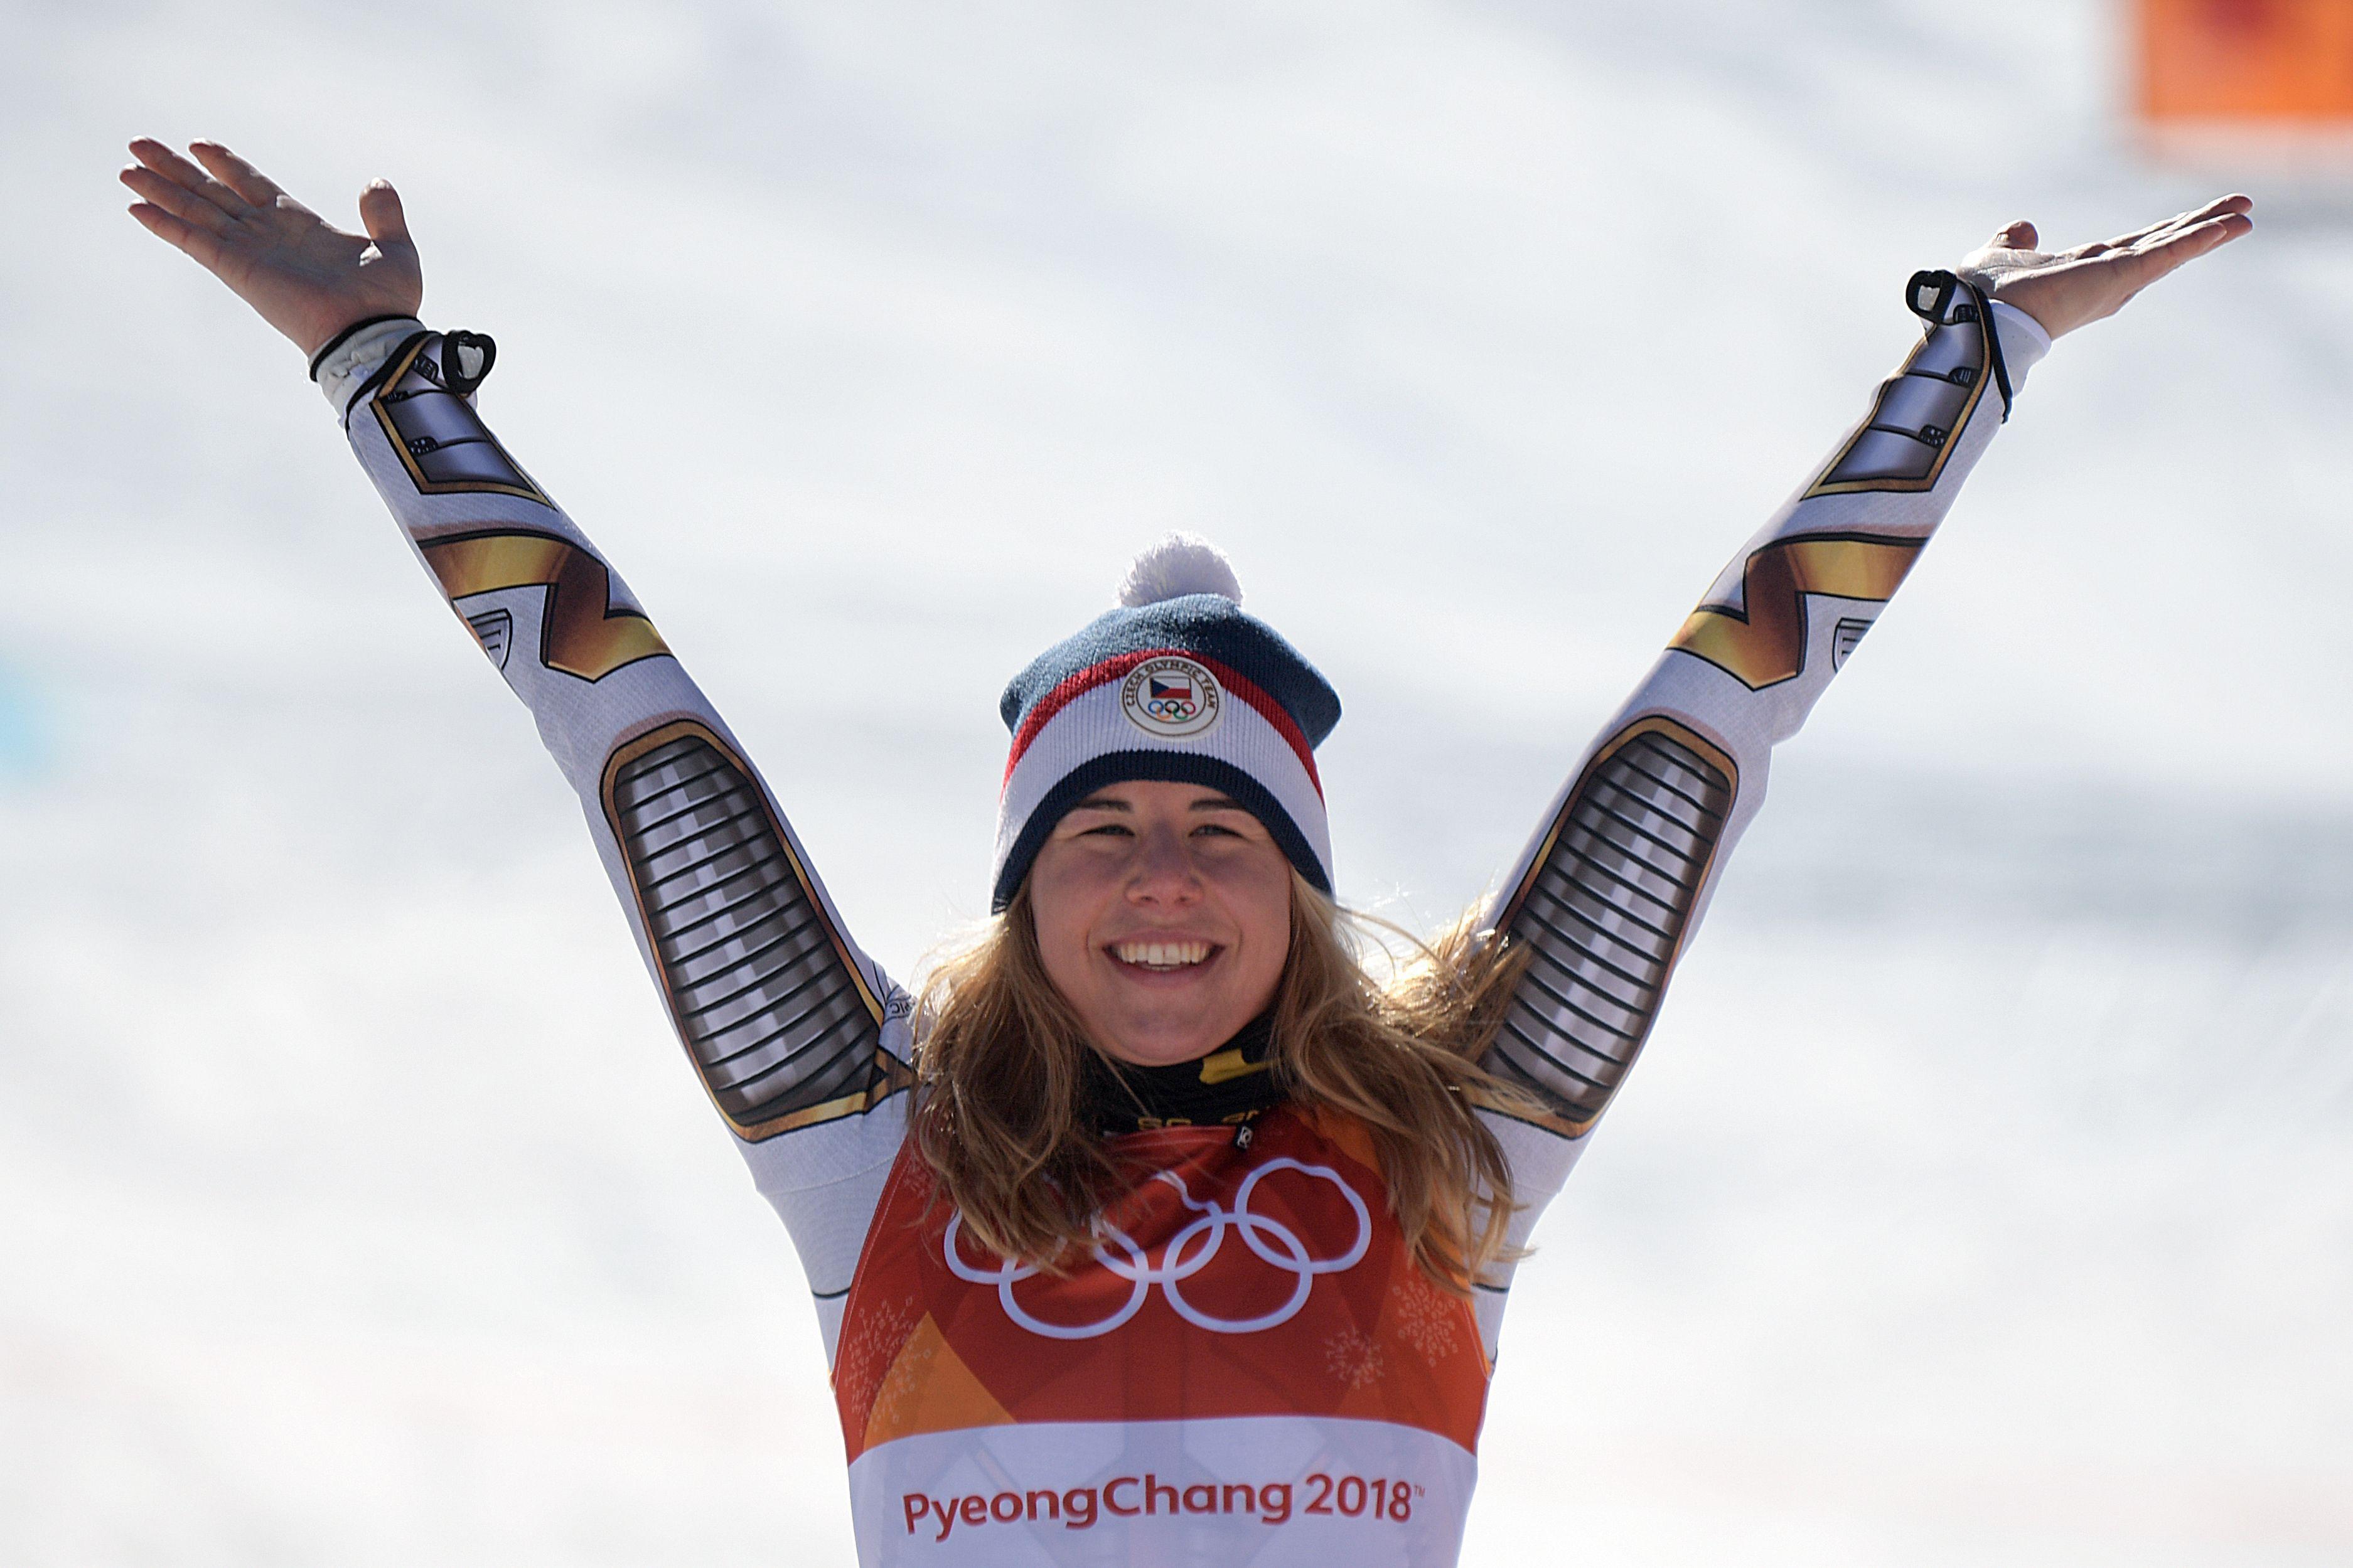 Ester Ledecka, The Snowboarder Who Won Super G Skiing Gold